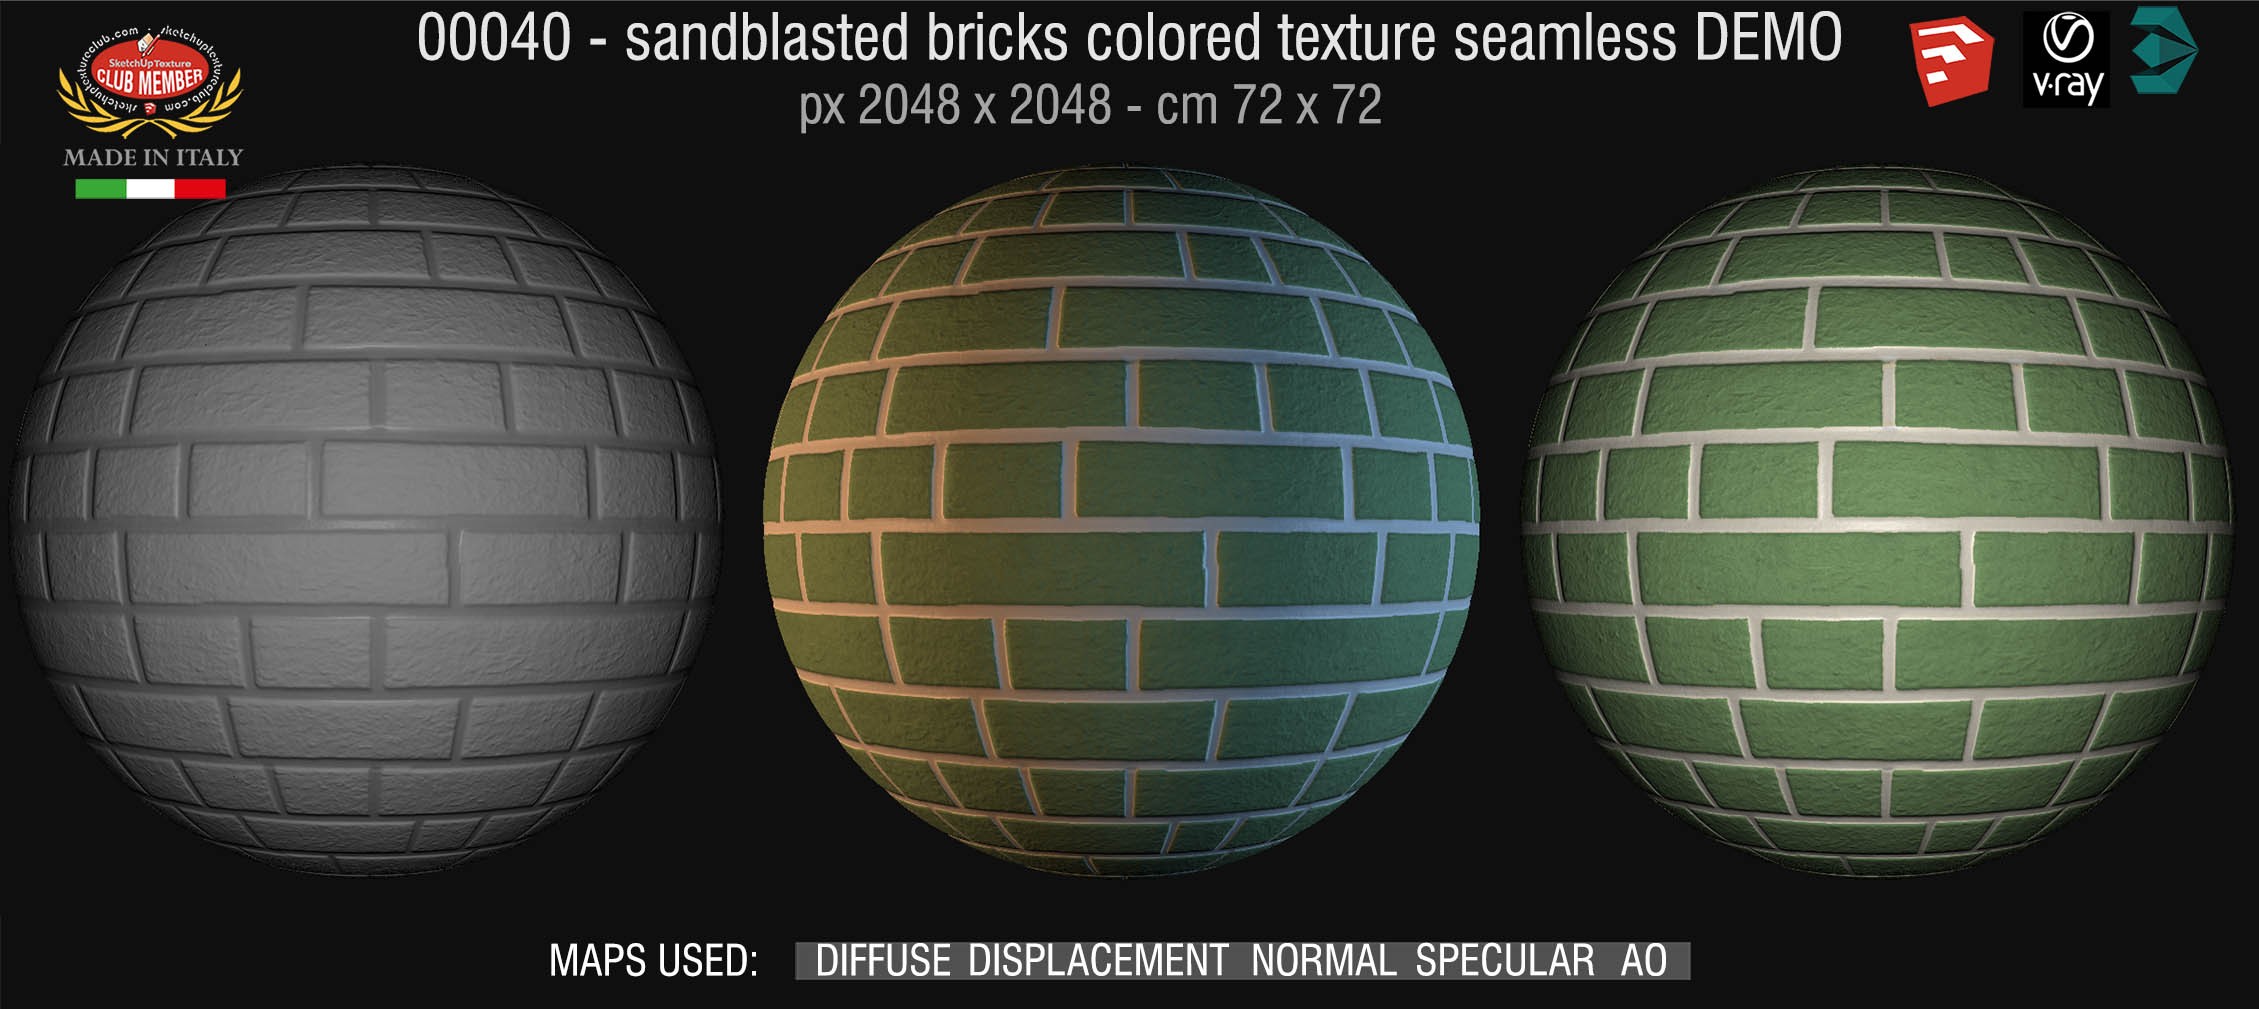 00040 Sandblasted bricks colored texture seamless + maps DEMO